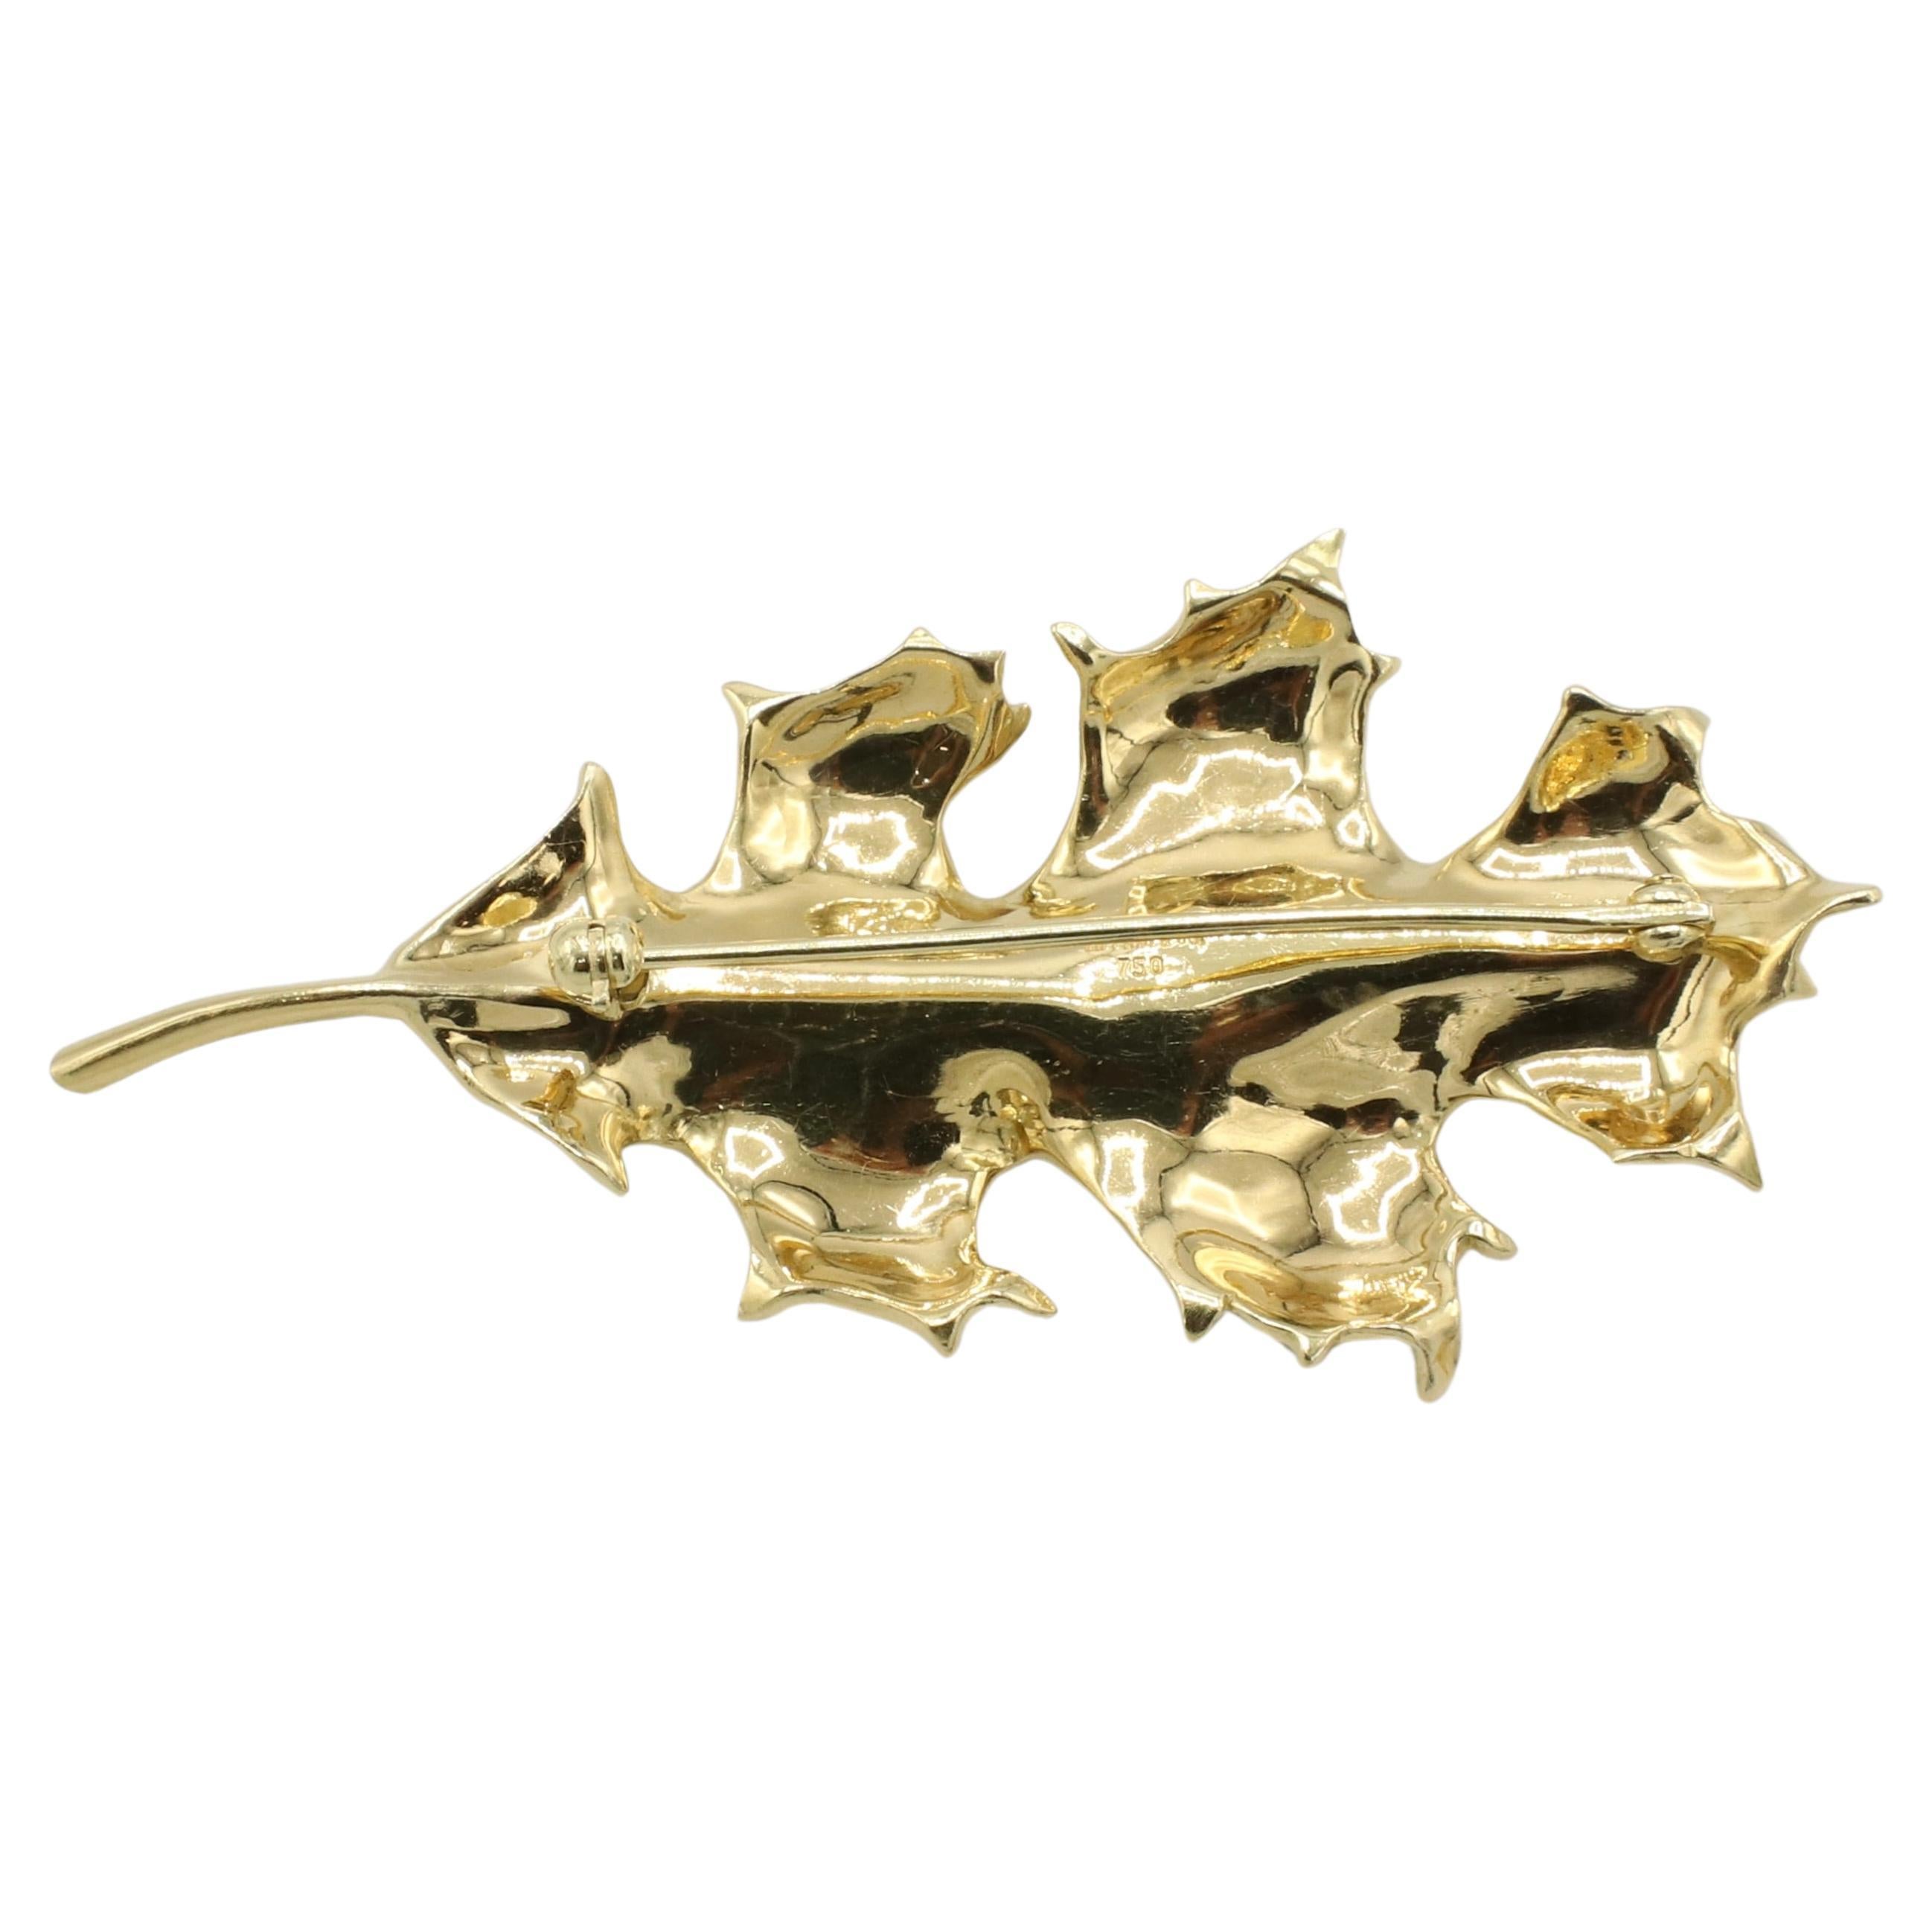 Tiffany & Co. 18 Karat Yellow Gold Oak Leaf Pin Brooch 
Metal: 18k yellow gold
Weight: 12.67 grams
Dimensions: 61 x 30.5mm
Signed: Tiffany & Co. 750